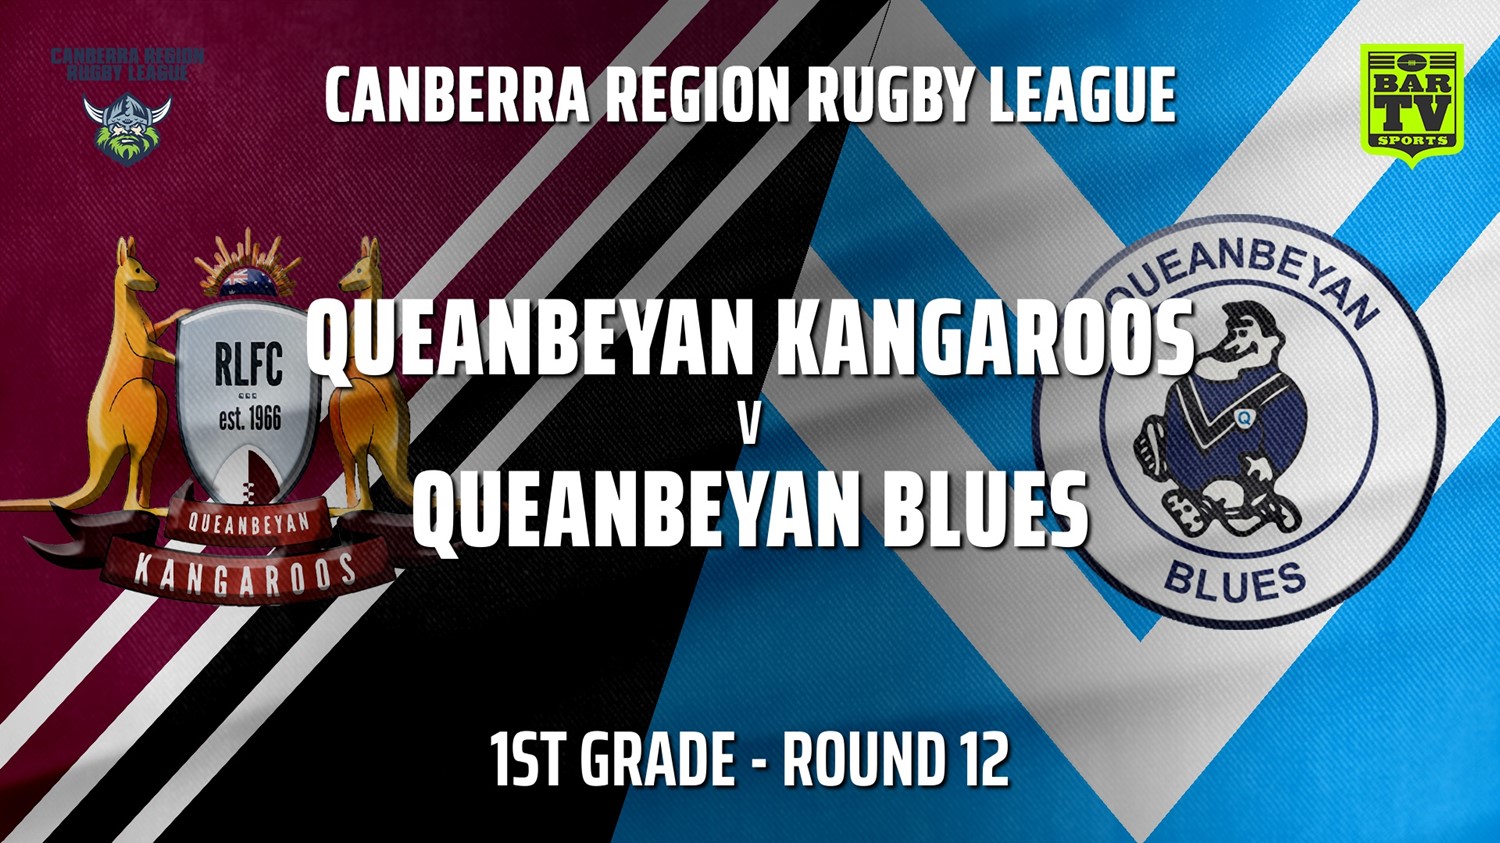 210717-Canberra Round 12 - 1st Grade - Queanbeyan Kangaroos v Queanbeyan Blues Minigame Slate Image